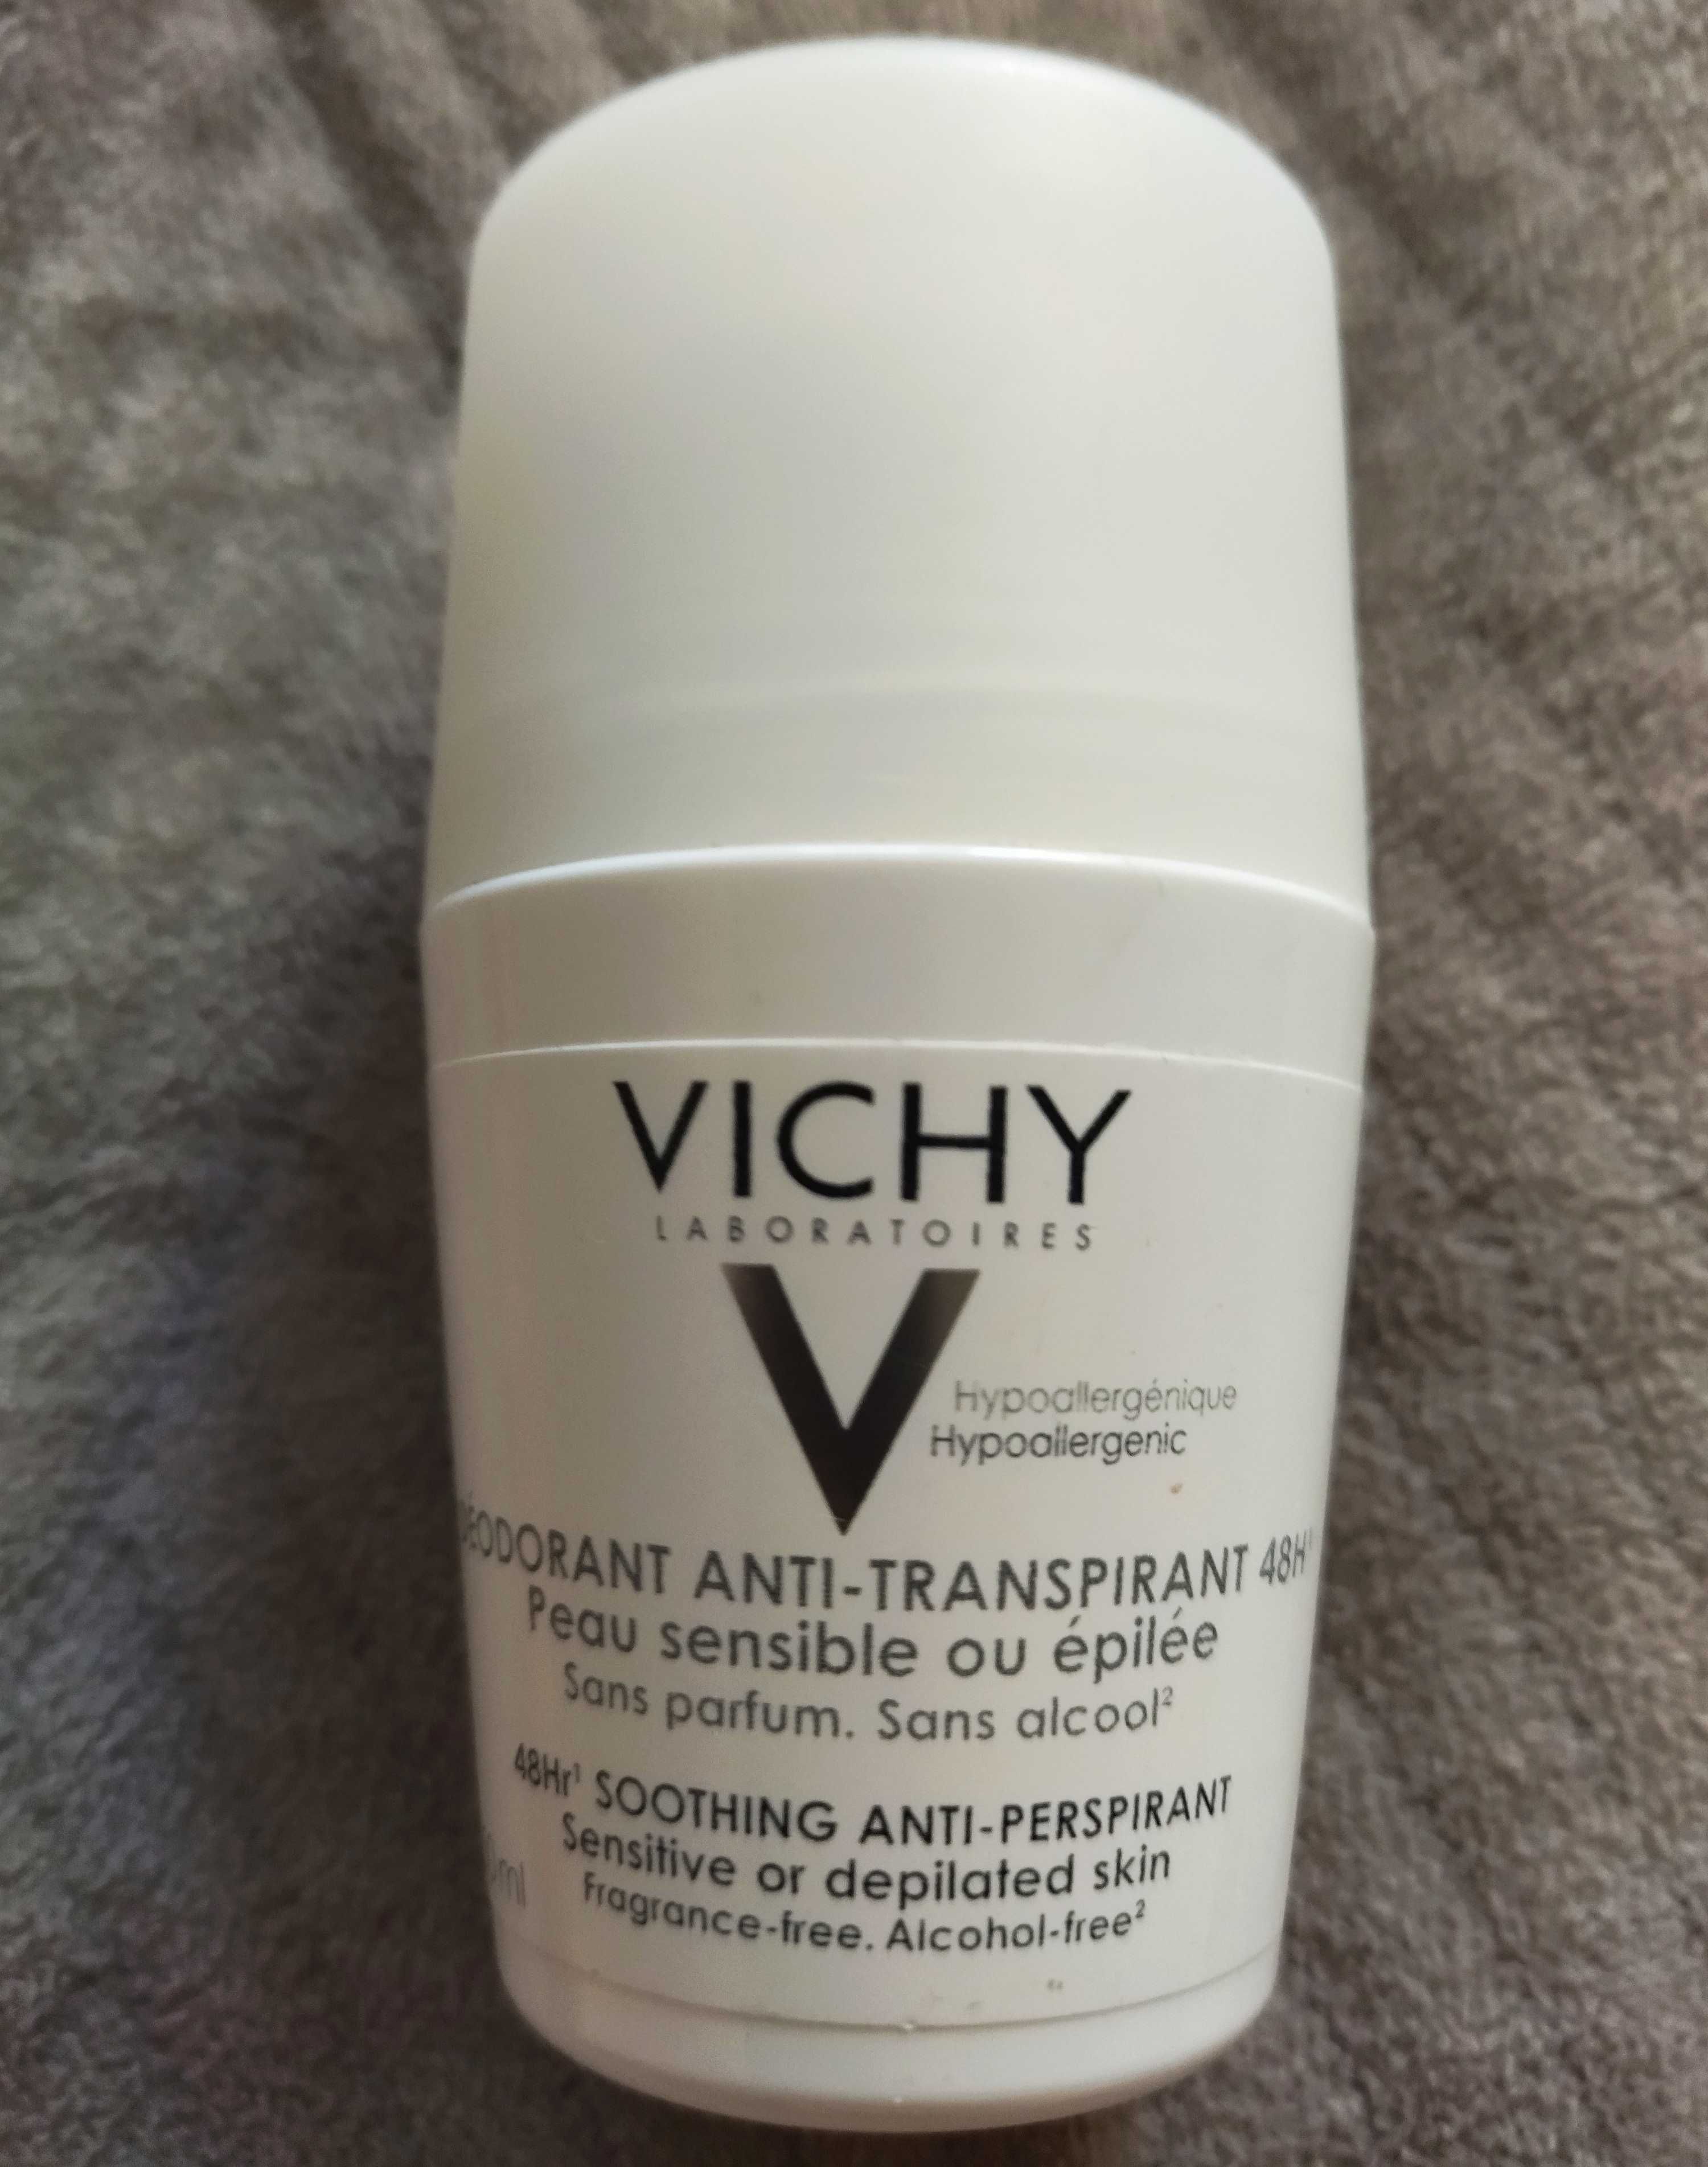 Vichy Deo Anti-Transpirant 48H 50 ml
antyperspirant